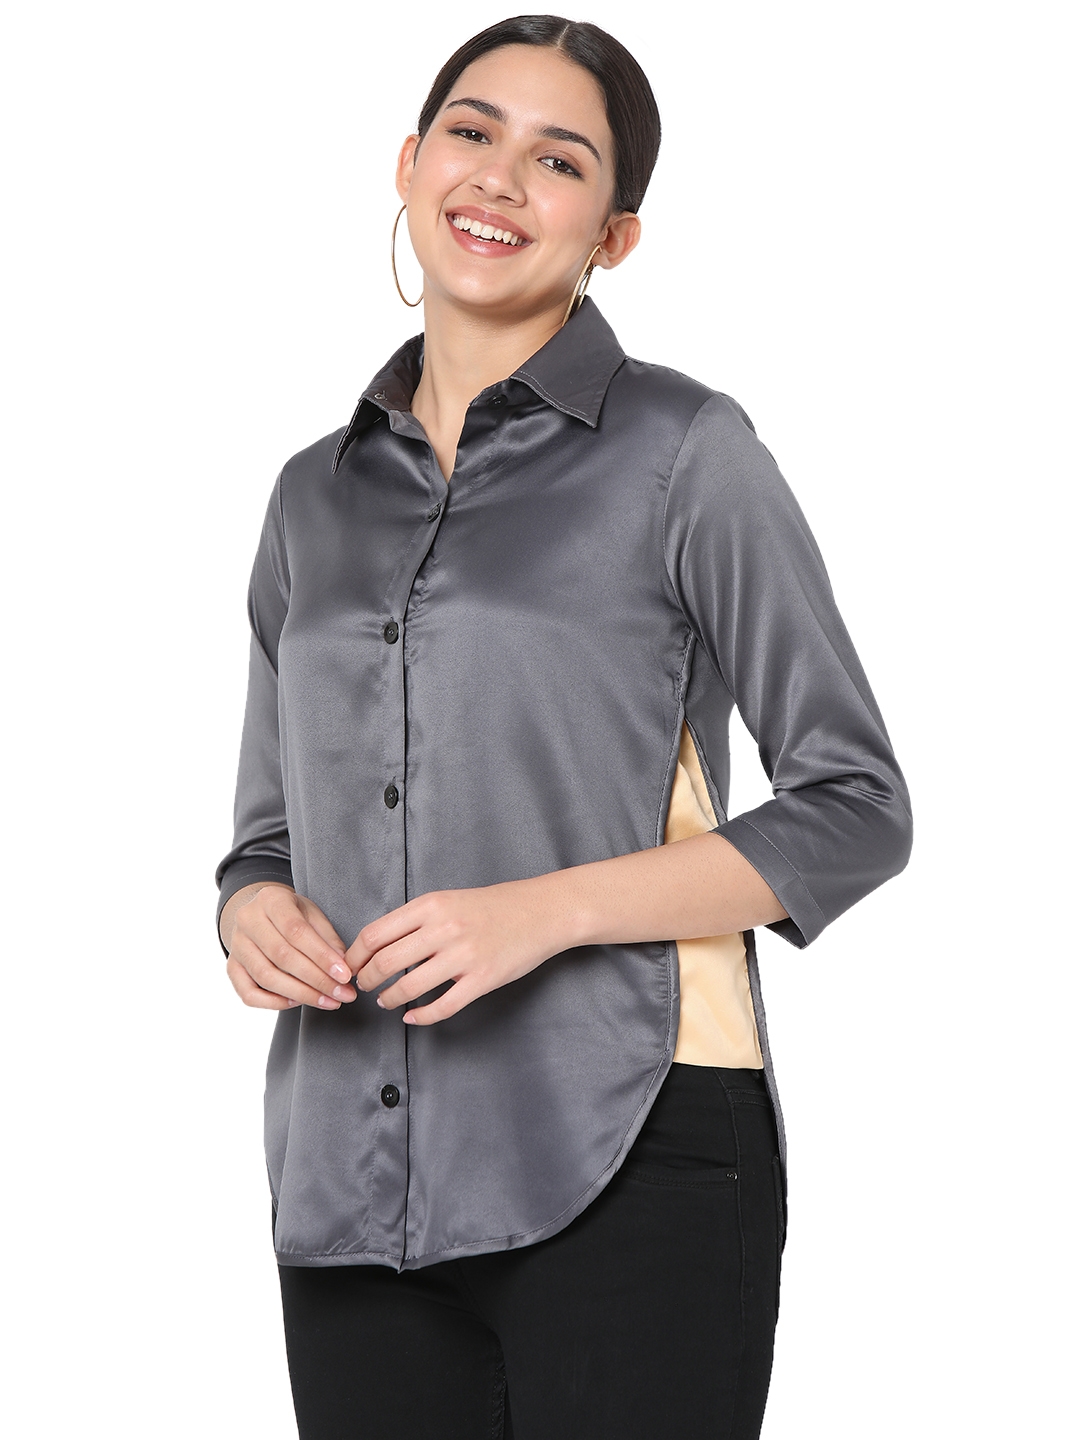 Smarty Pants | Smarty Pants women's silk satin grey color apple cut formal shirt. 1